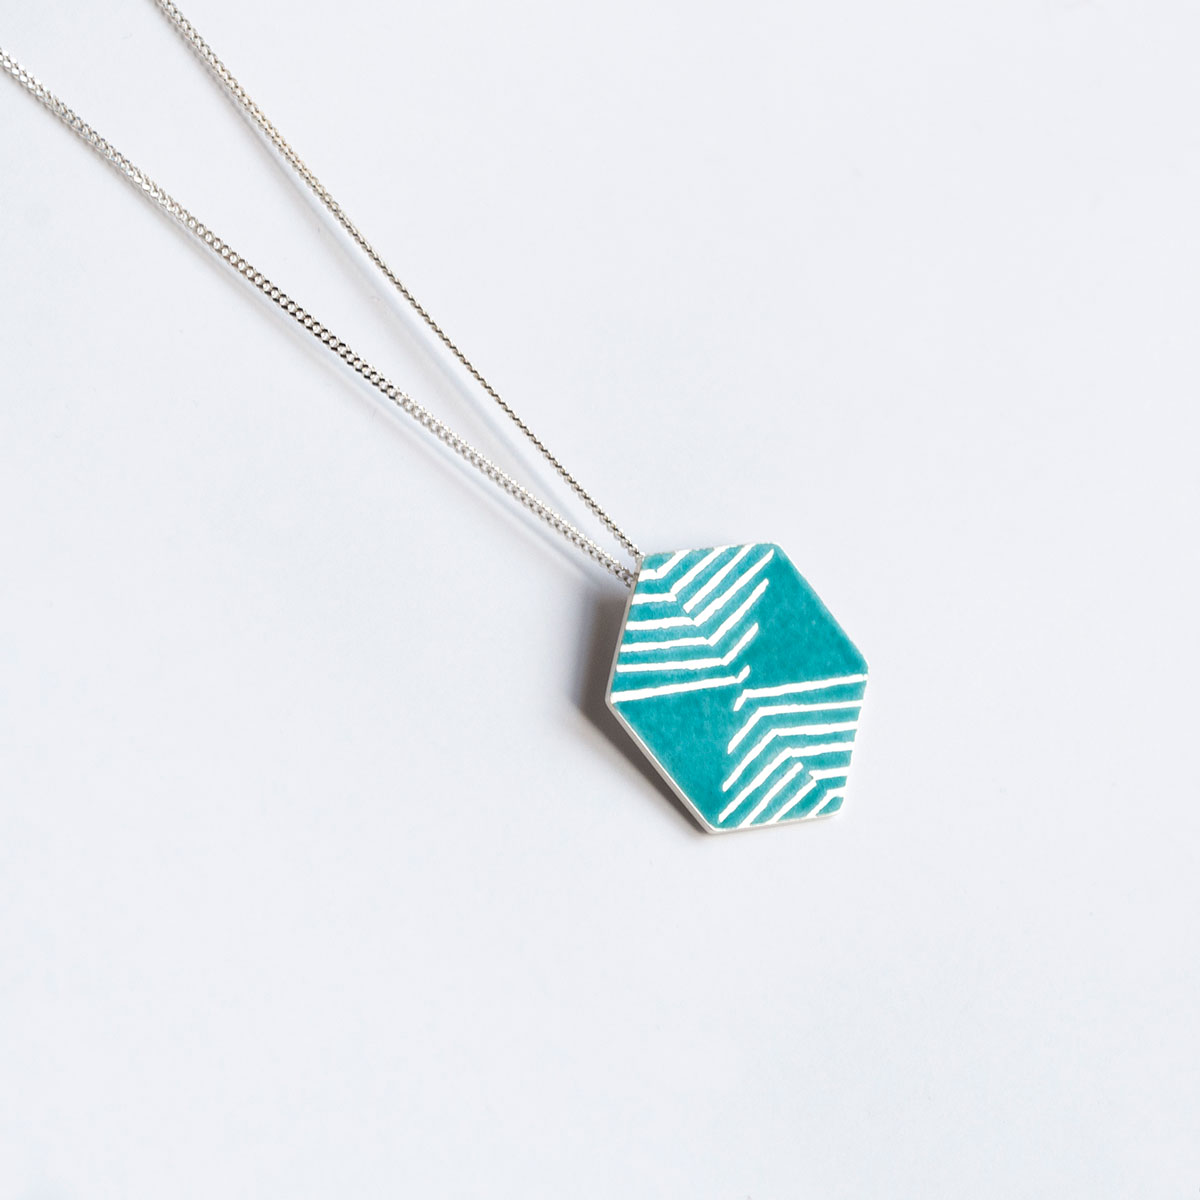 ‘Weave’ Turquoise Hexagonal Pendant, Large